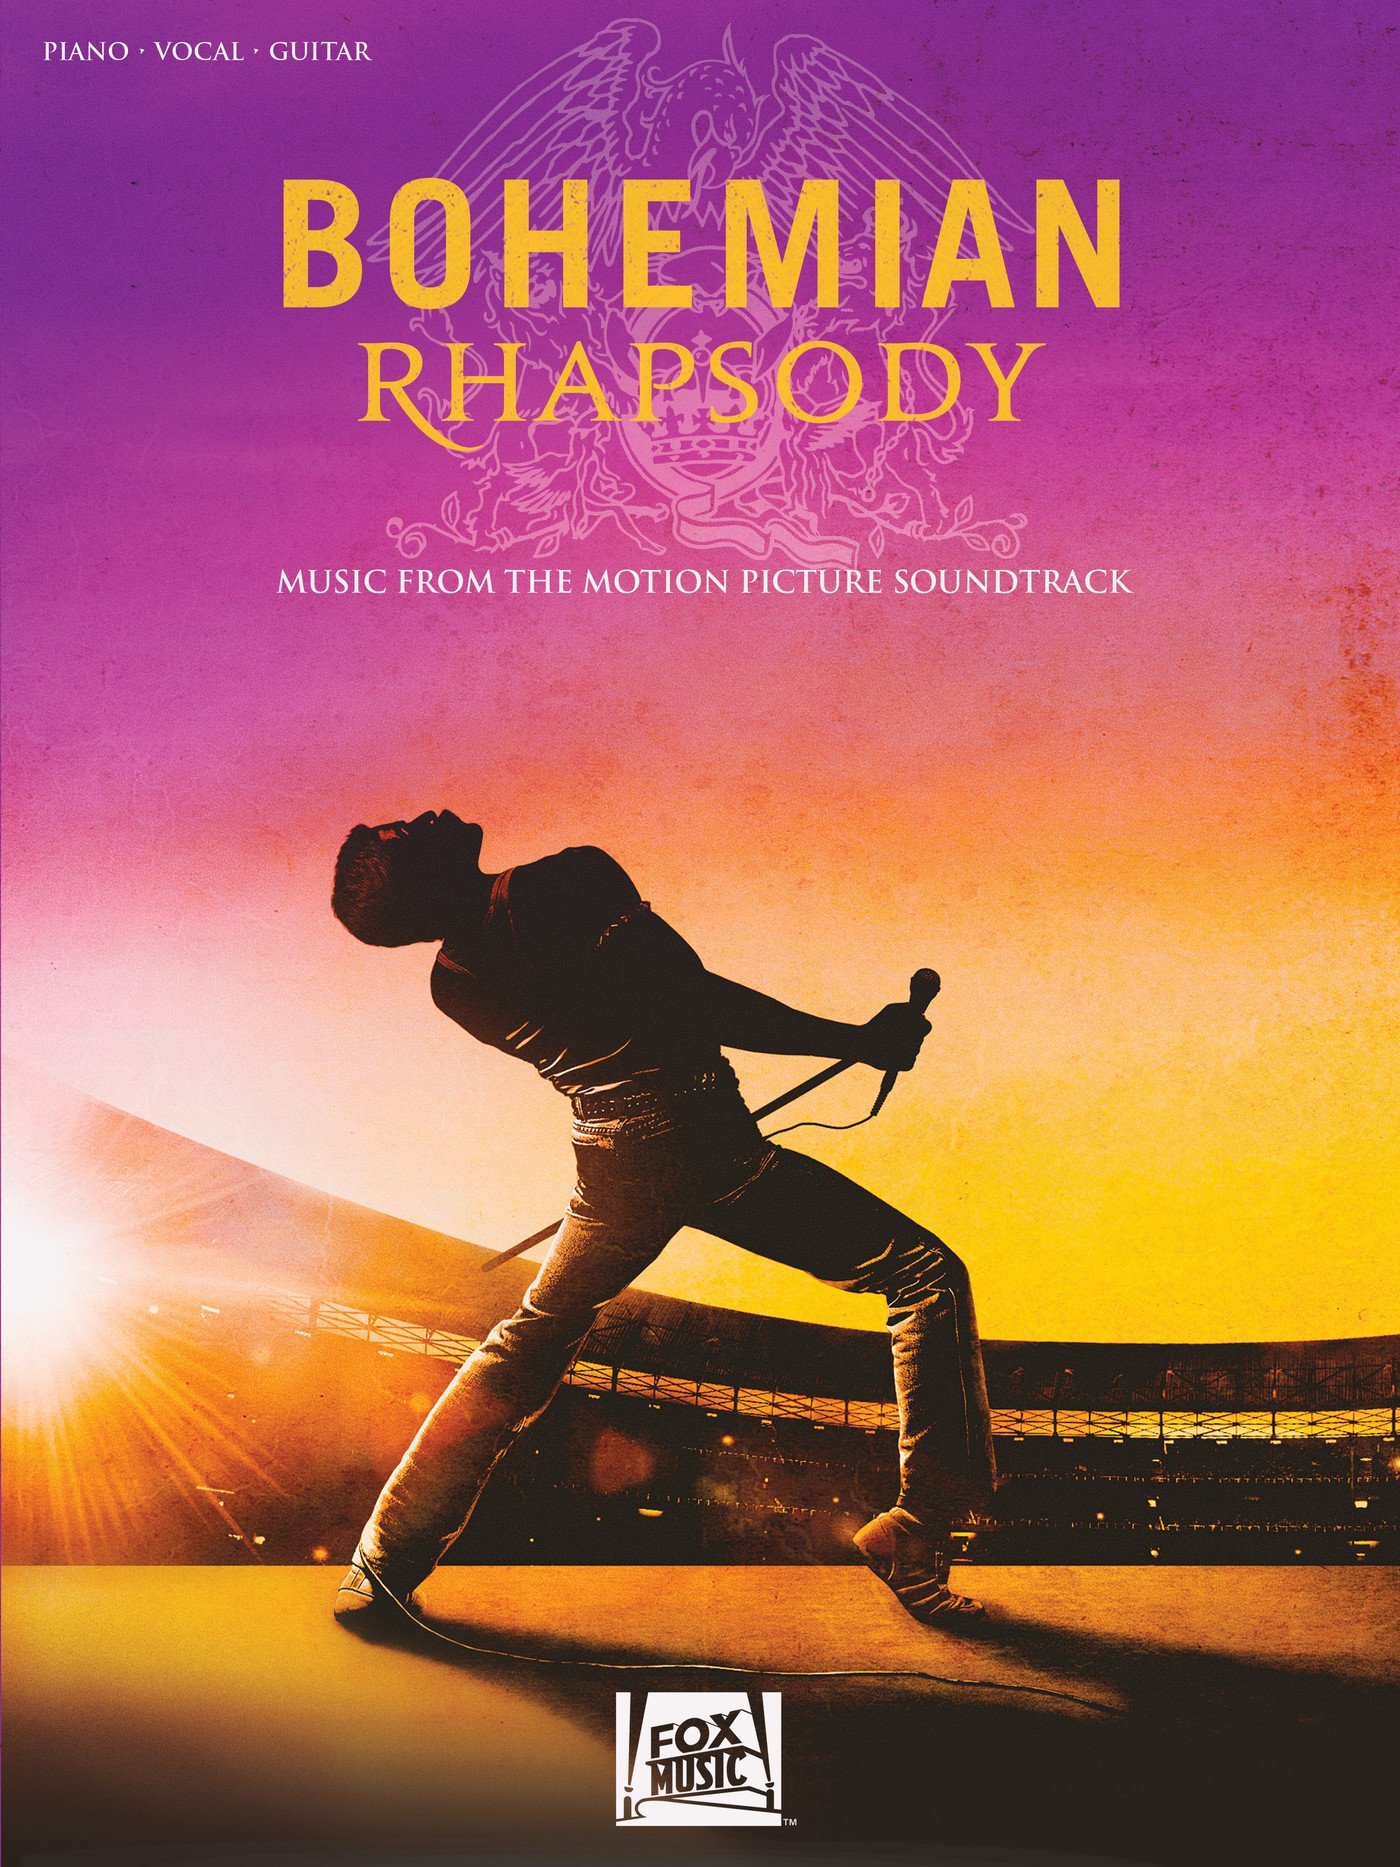 Bohemian Rhapsody download the last version for apple